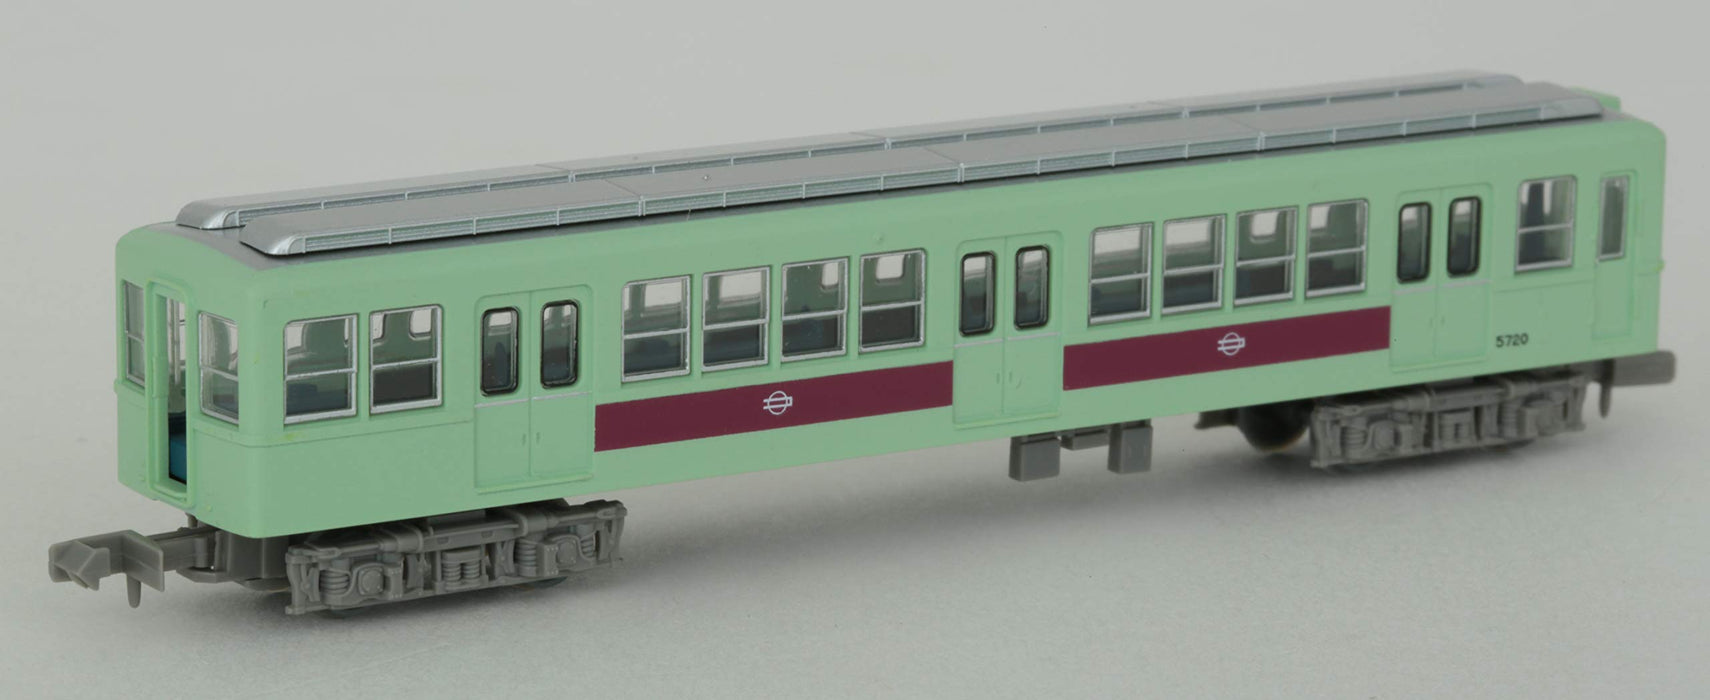 TOMYTEC Osaka Metro Tanimachi Line Series 50 5069 Konfiguration 6 Wagen im Maßstab AN